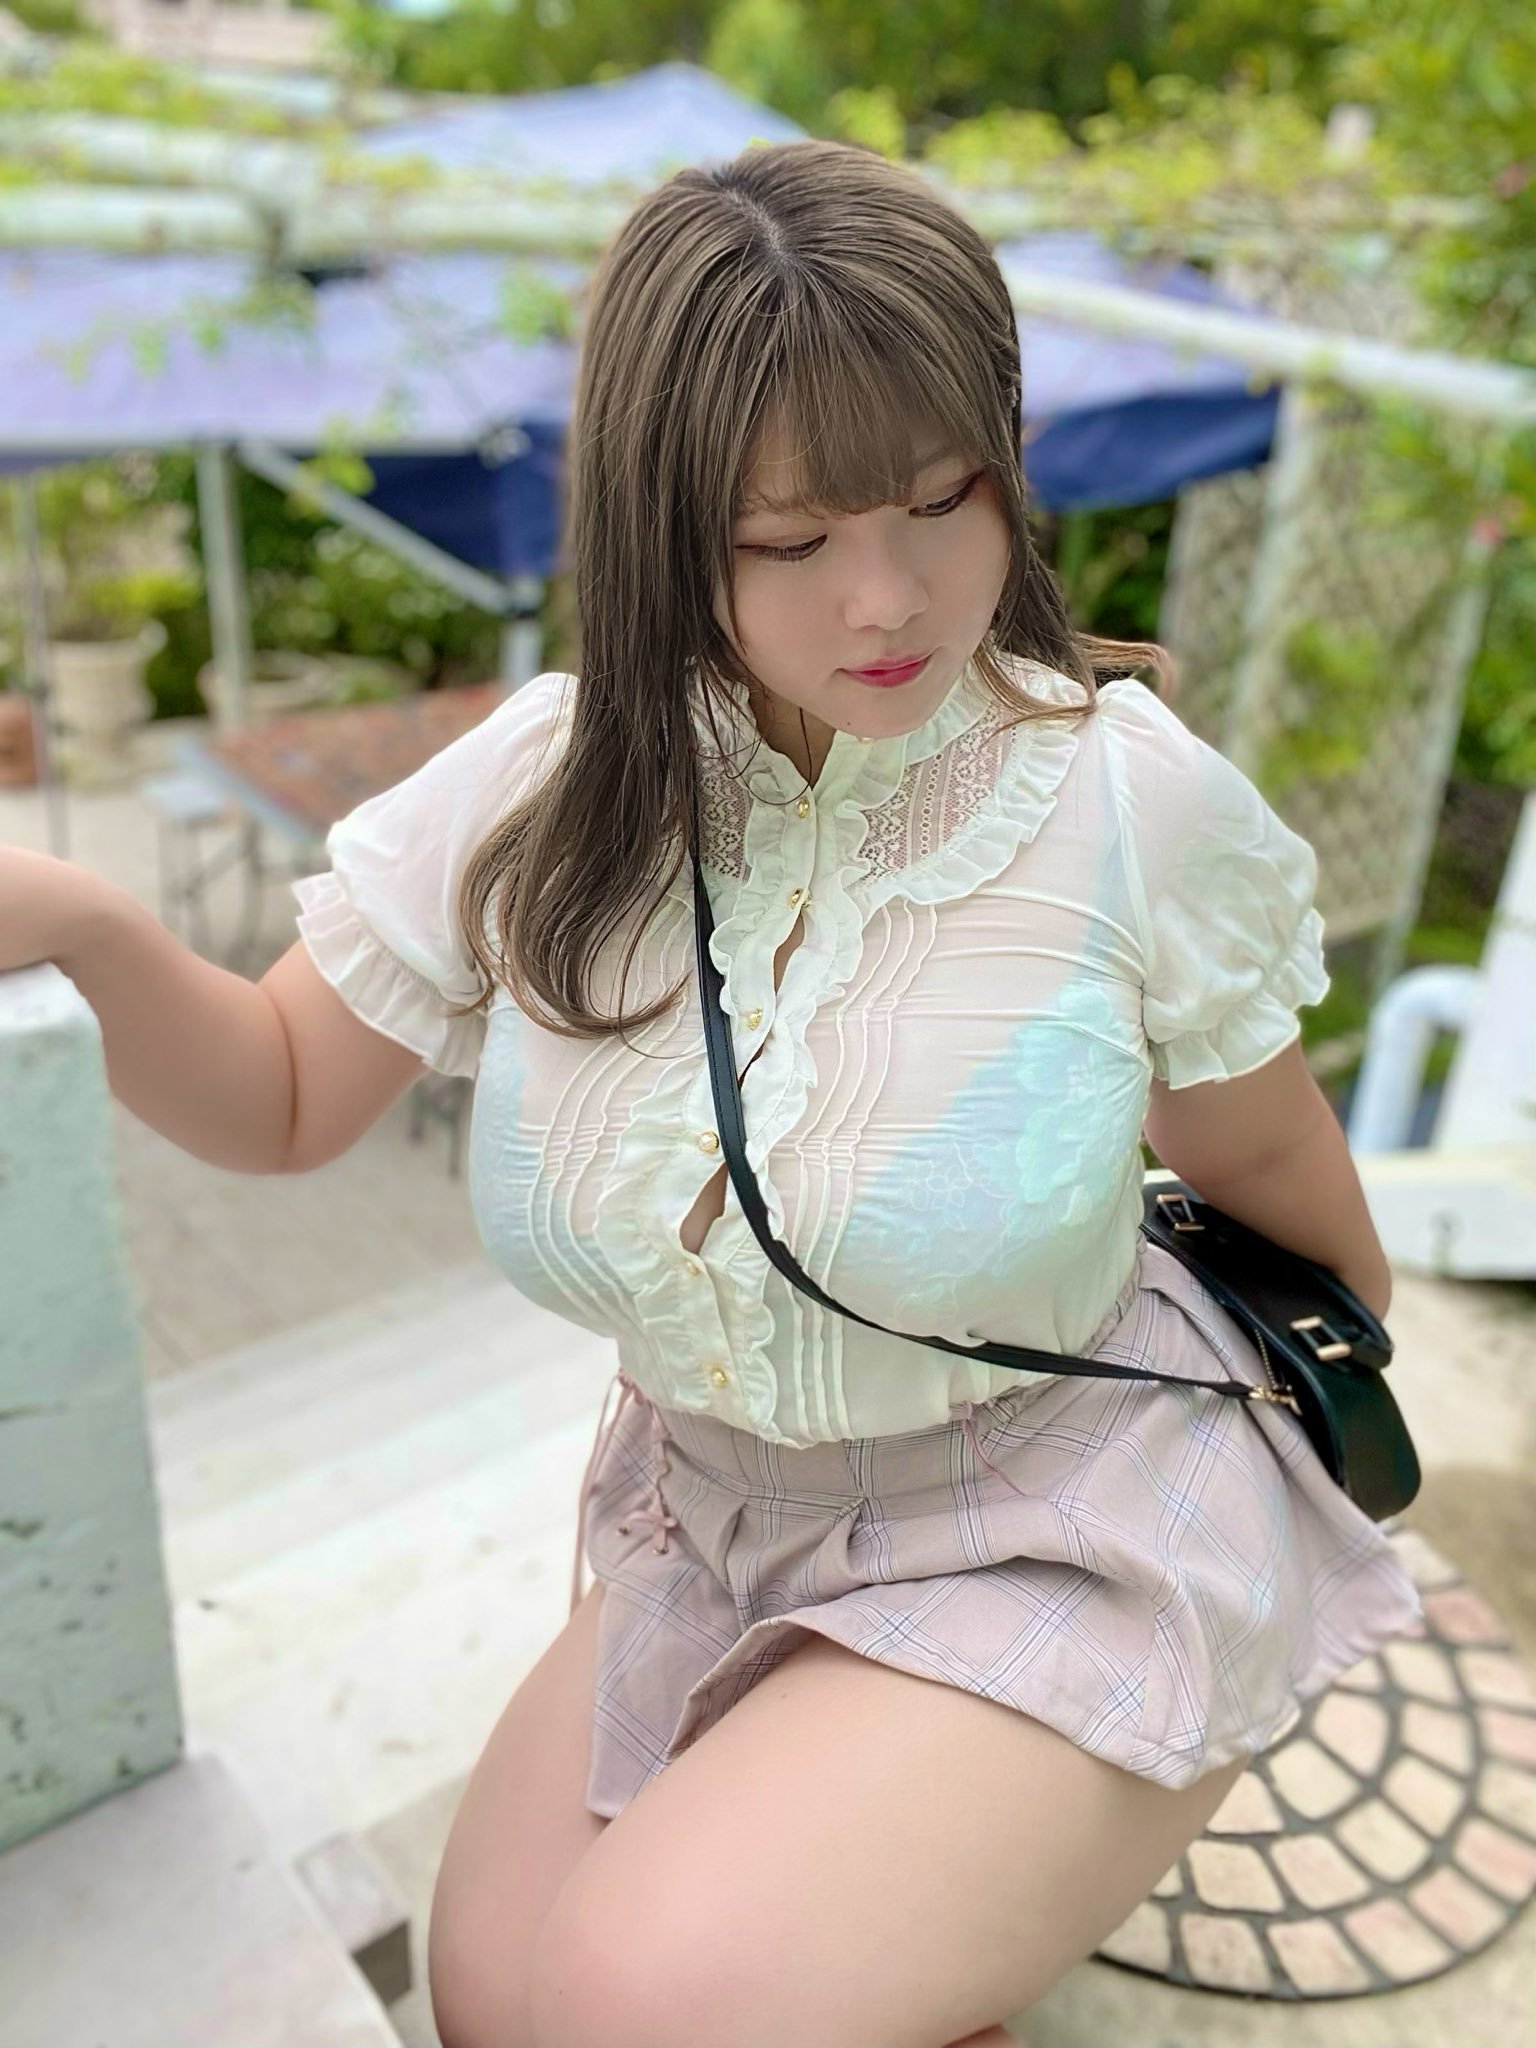 Hoshino ume - NSFW, Girls, Asian, Japanese, Erotic, Underwear, Fullness, Booty, Boobs, , School uniform, Longpost